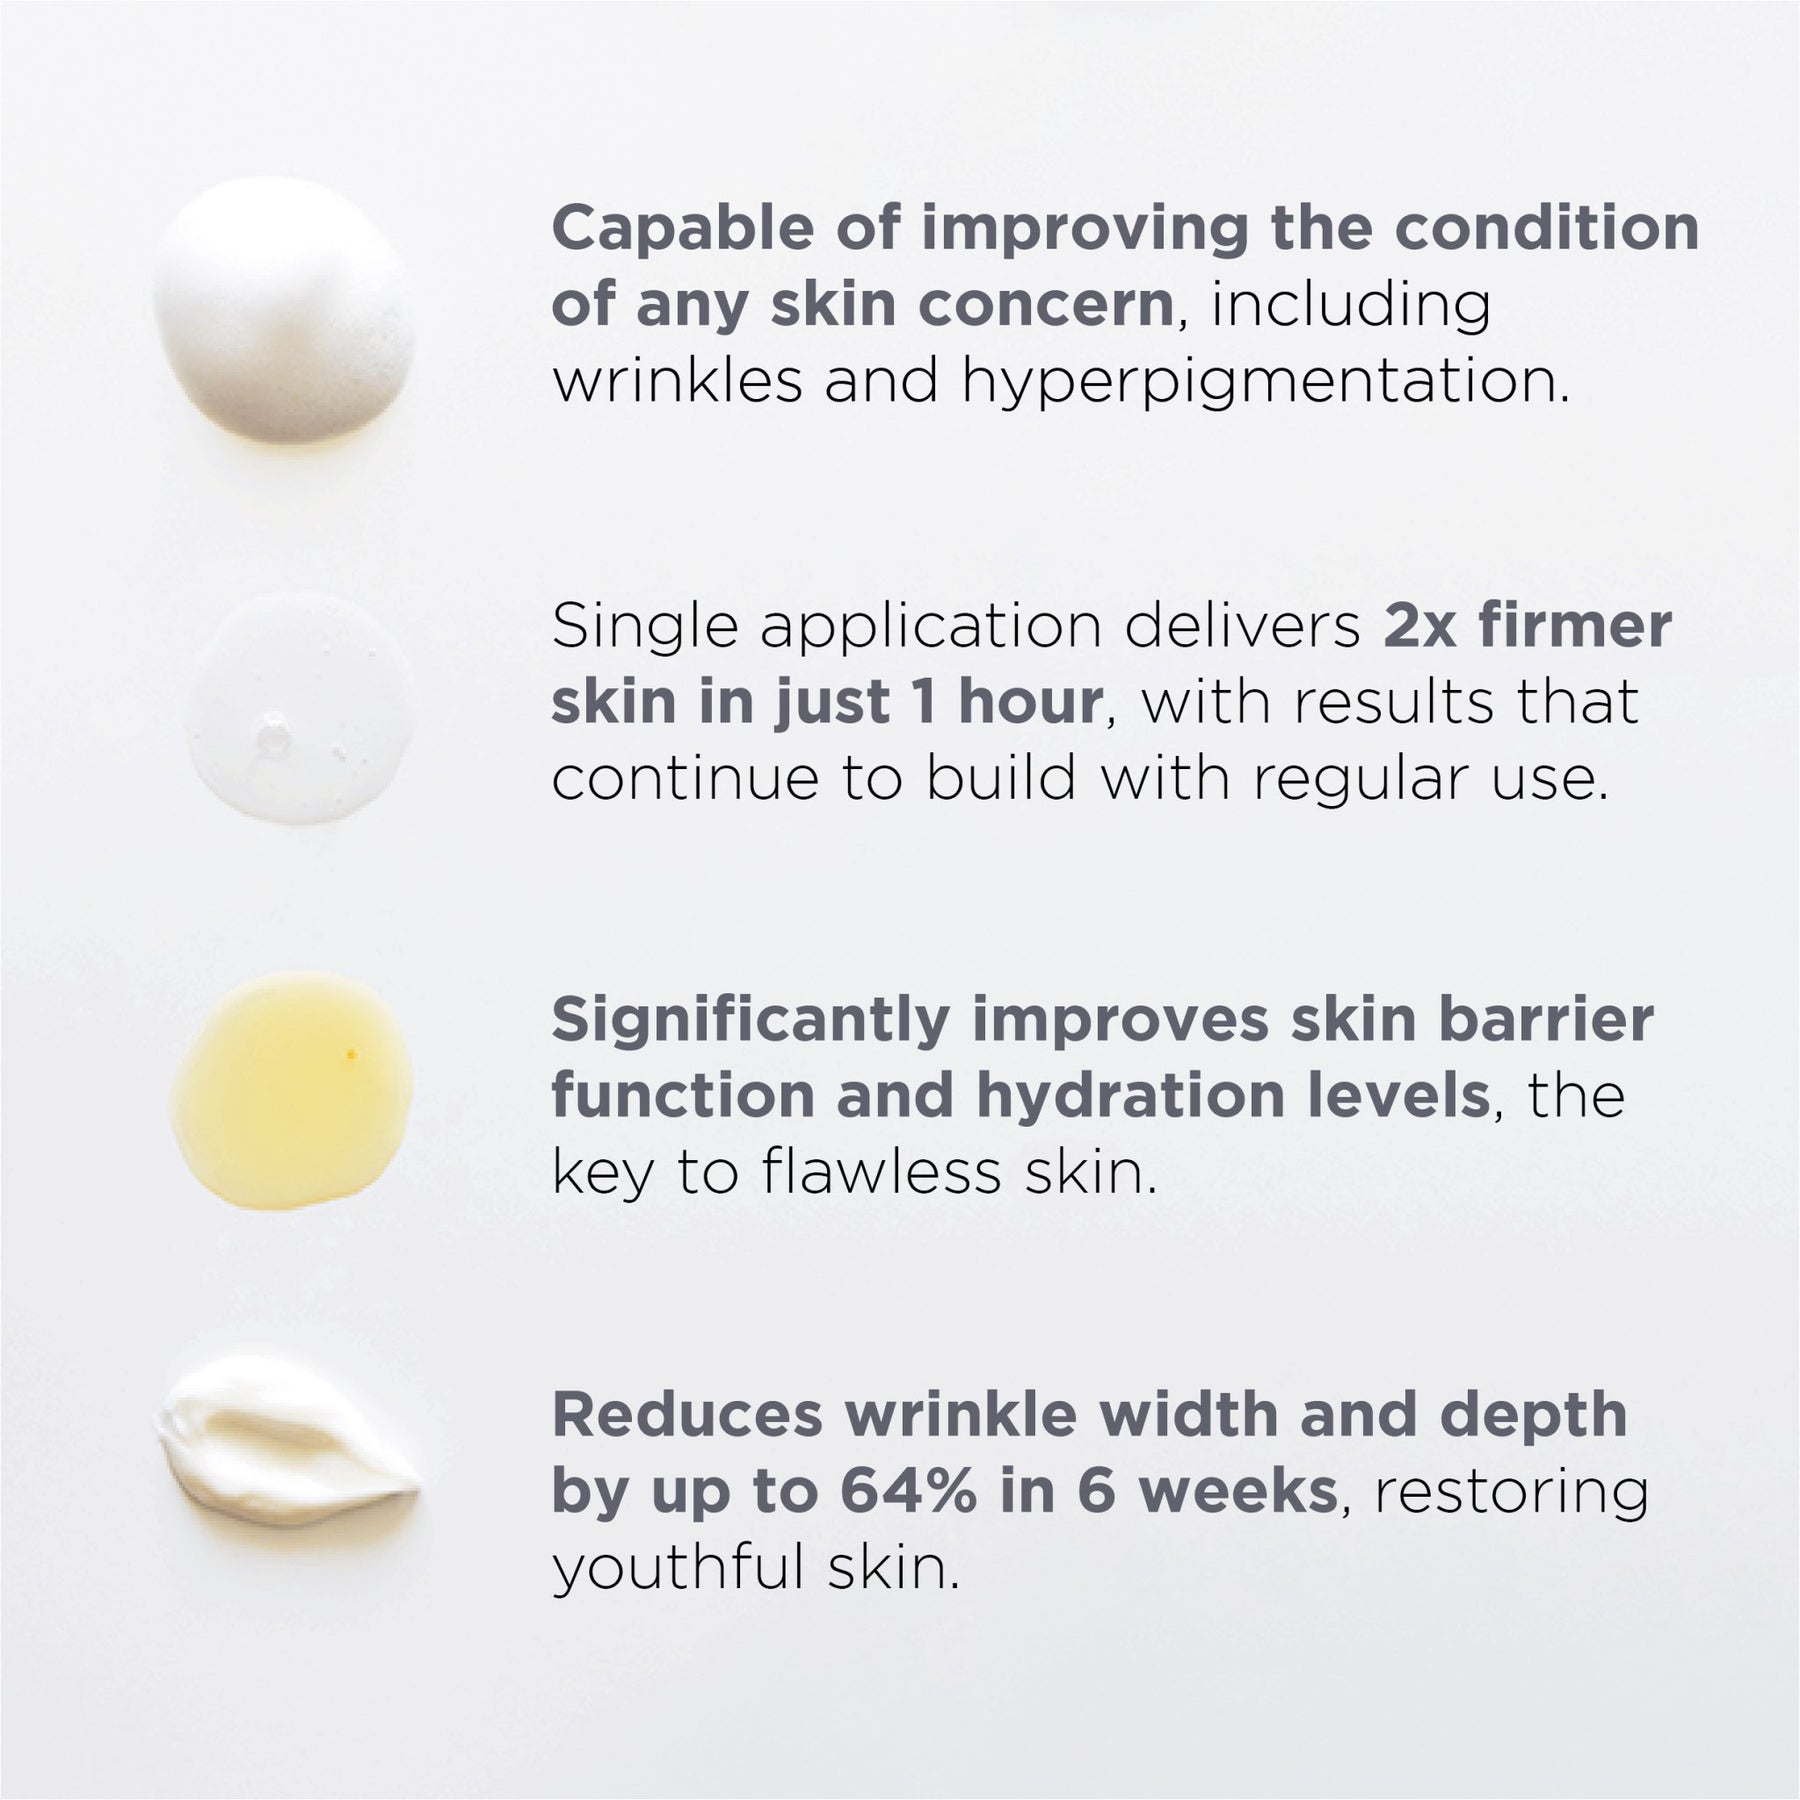 PM Recovery Night Cream - MIE Skincare